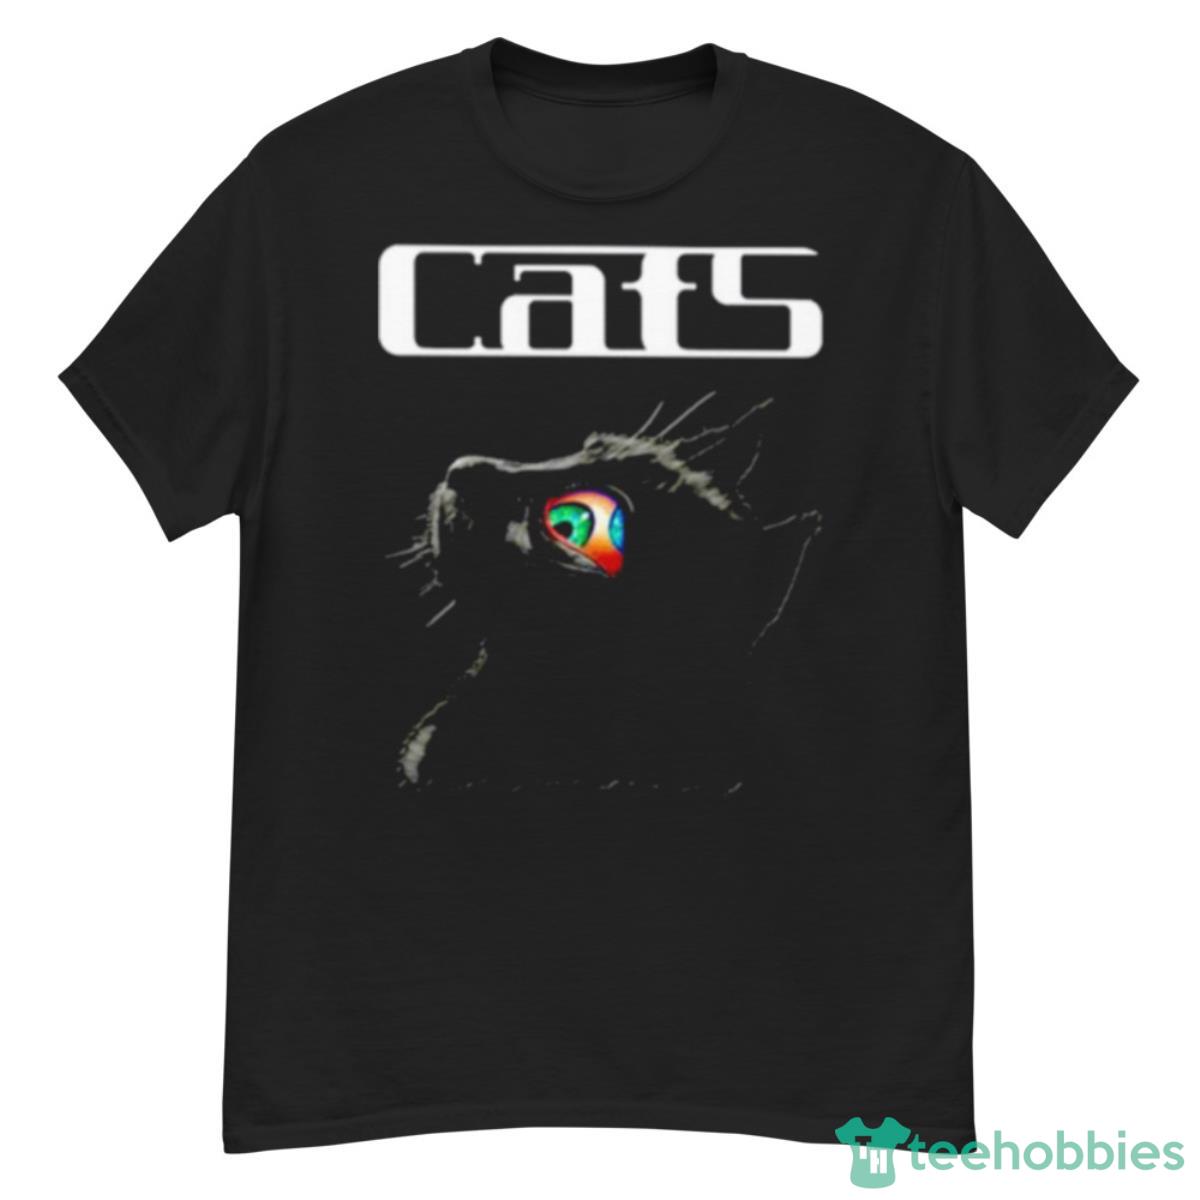 Cats Darklord Pug Shirt - G500 Men’s Classic T-Shirt